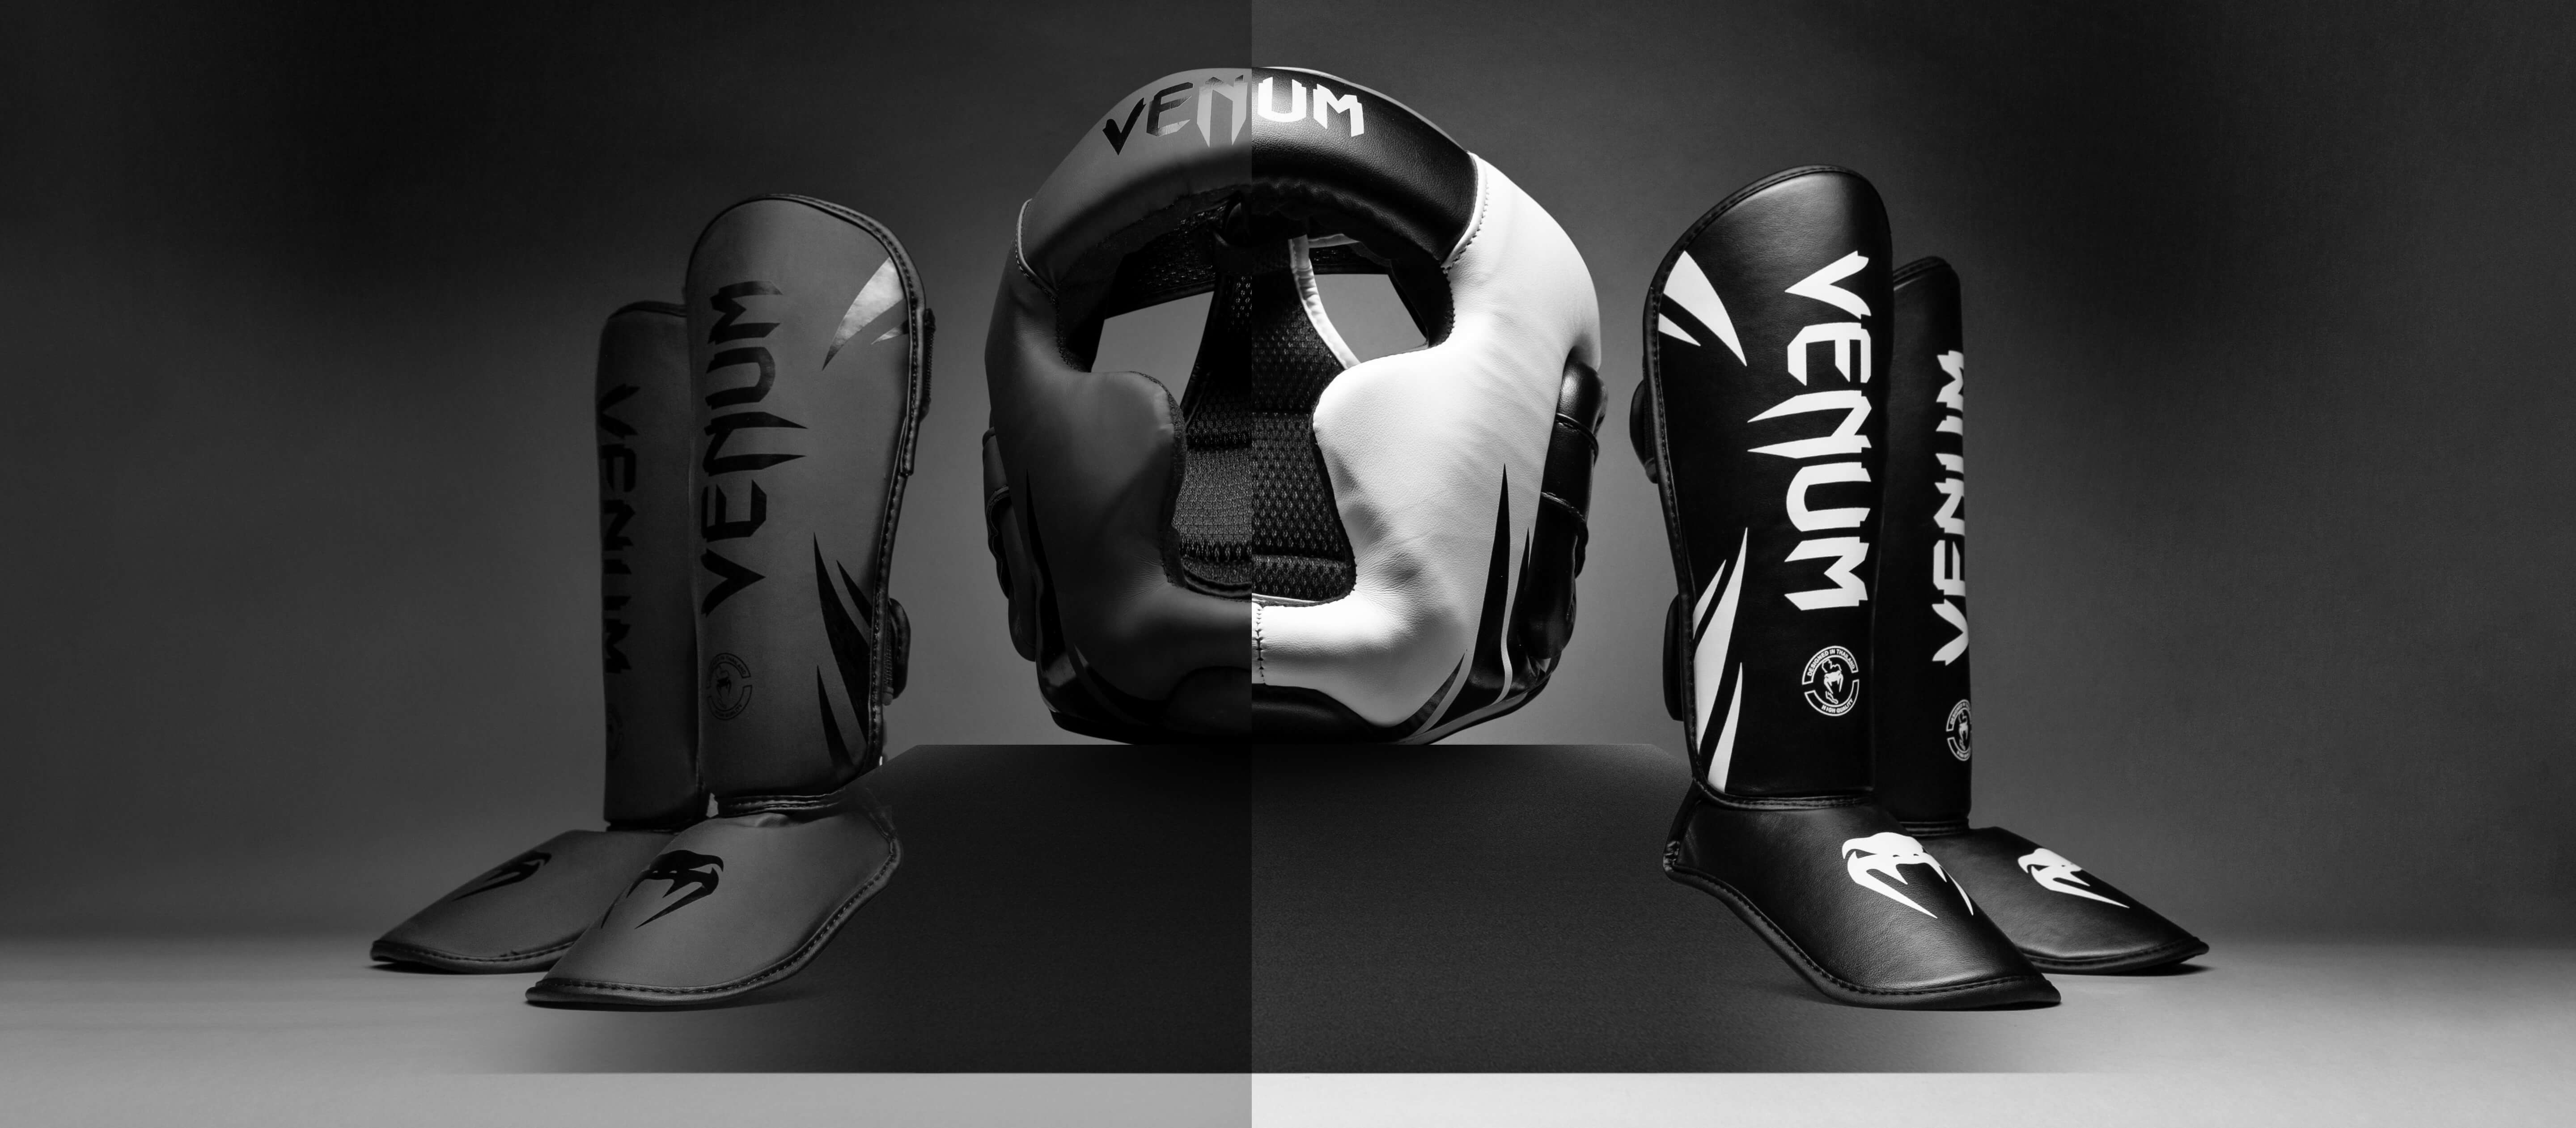 Venum Boxing and MMA Equipment